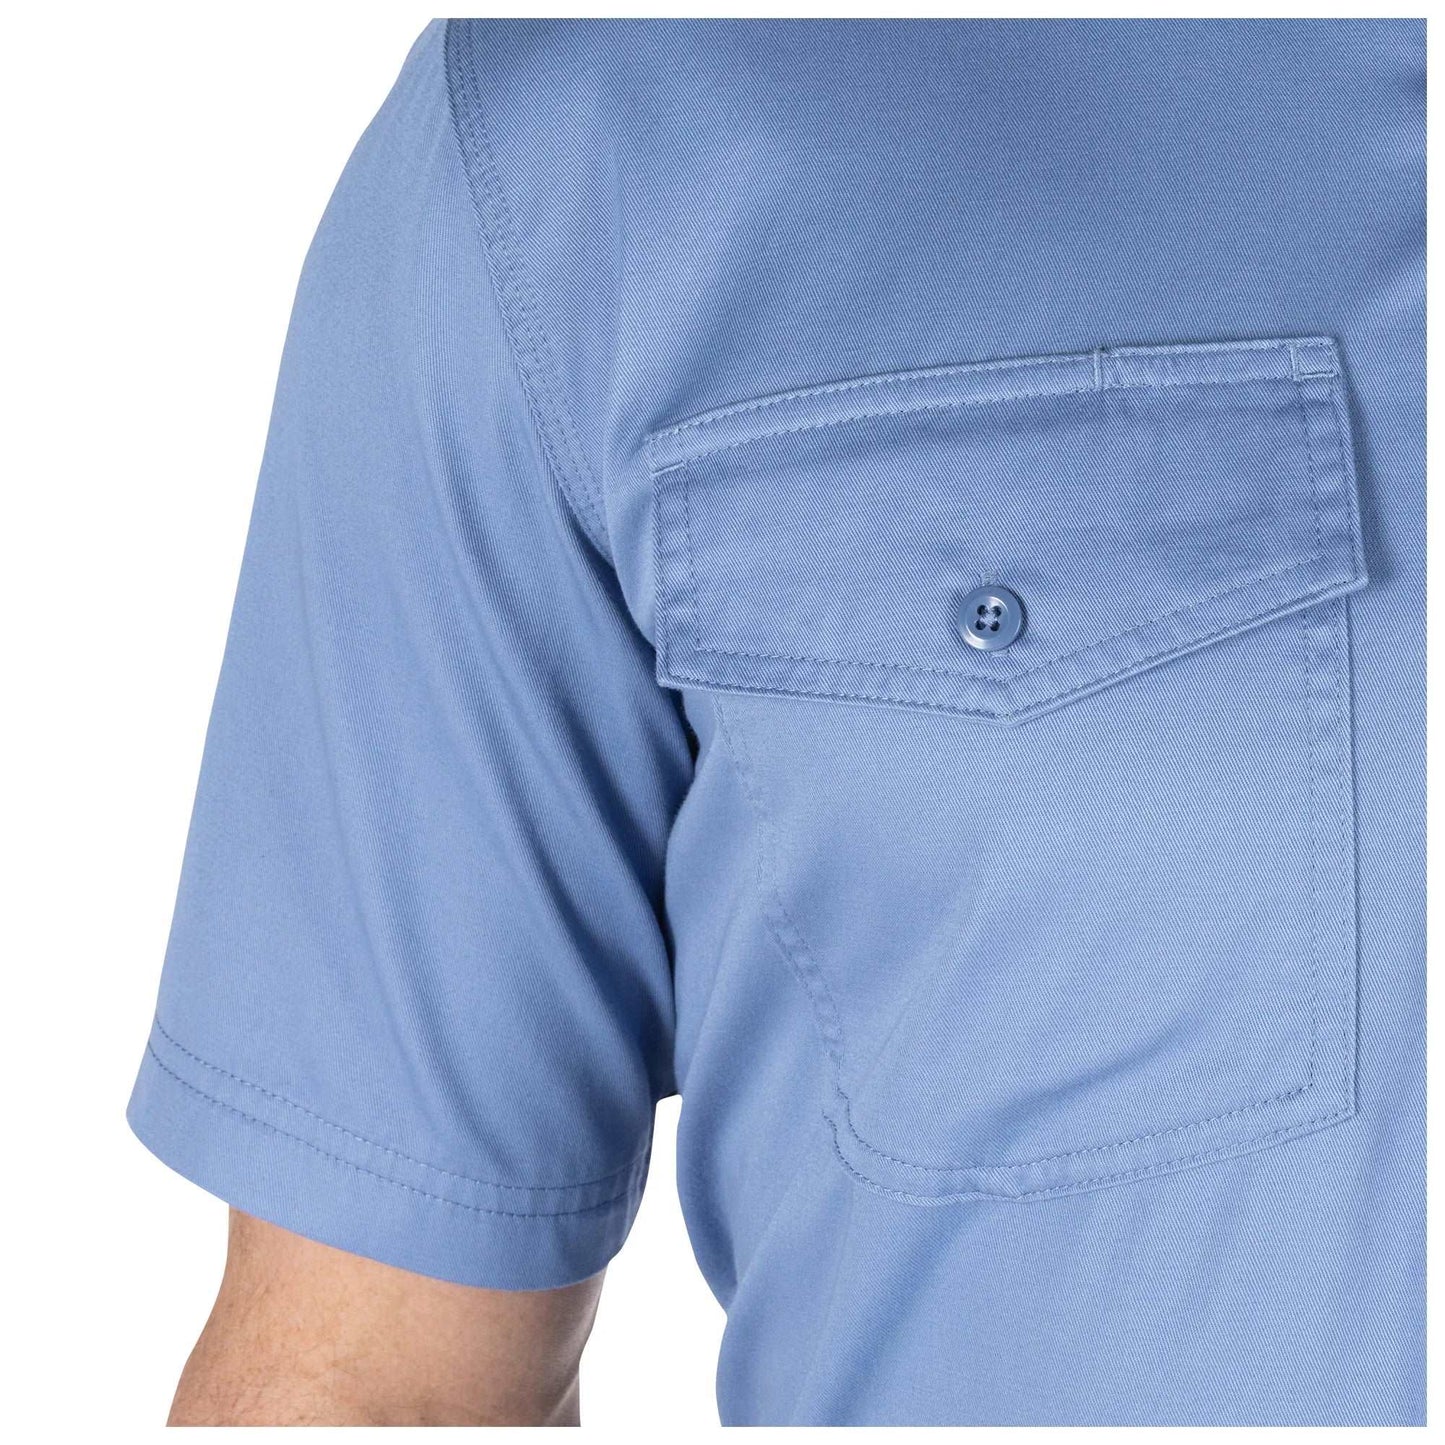 Tops - 5.11 Tactical Company Short Sleeve Shirt